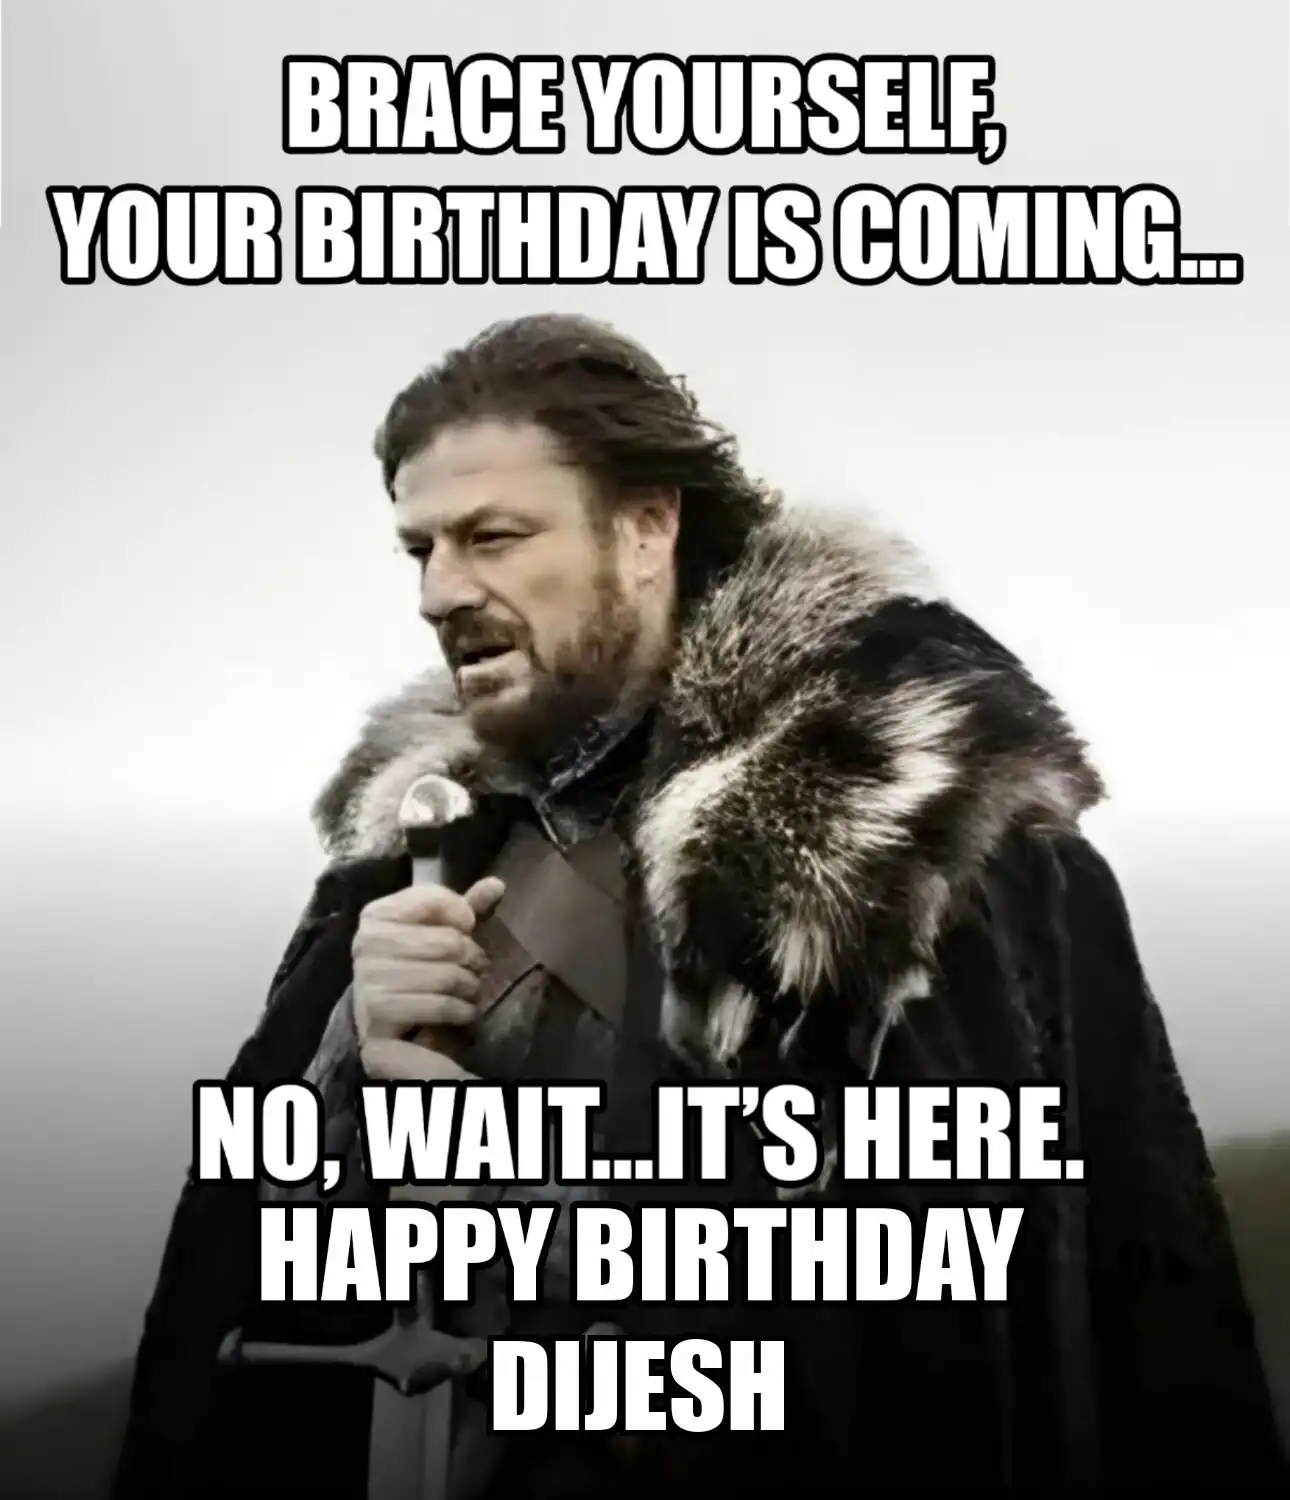 Happy Birthday Dijesh Brace Yourself Your Birthday Is Coming Meme